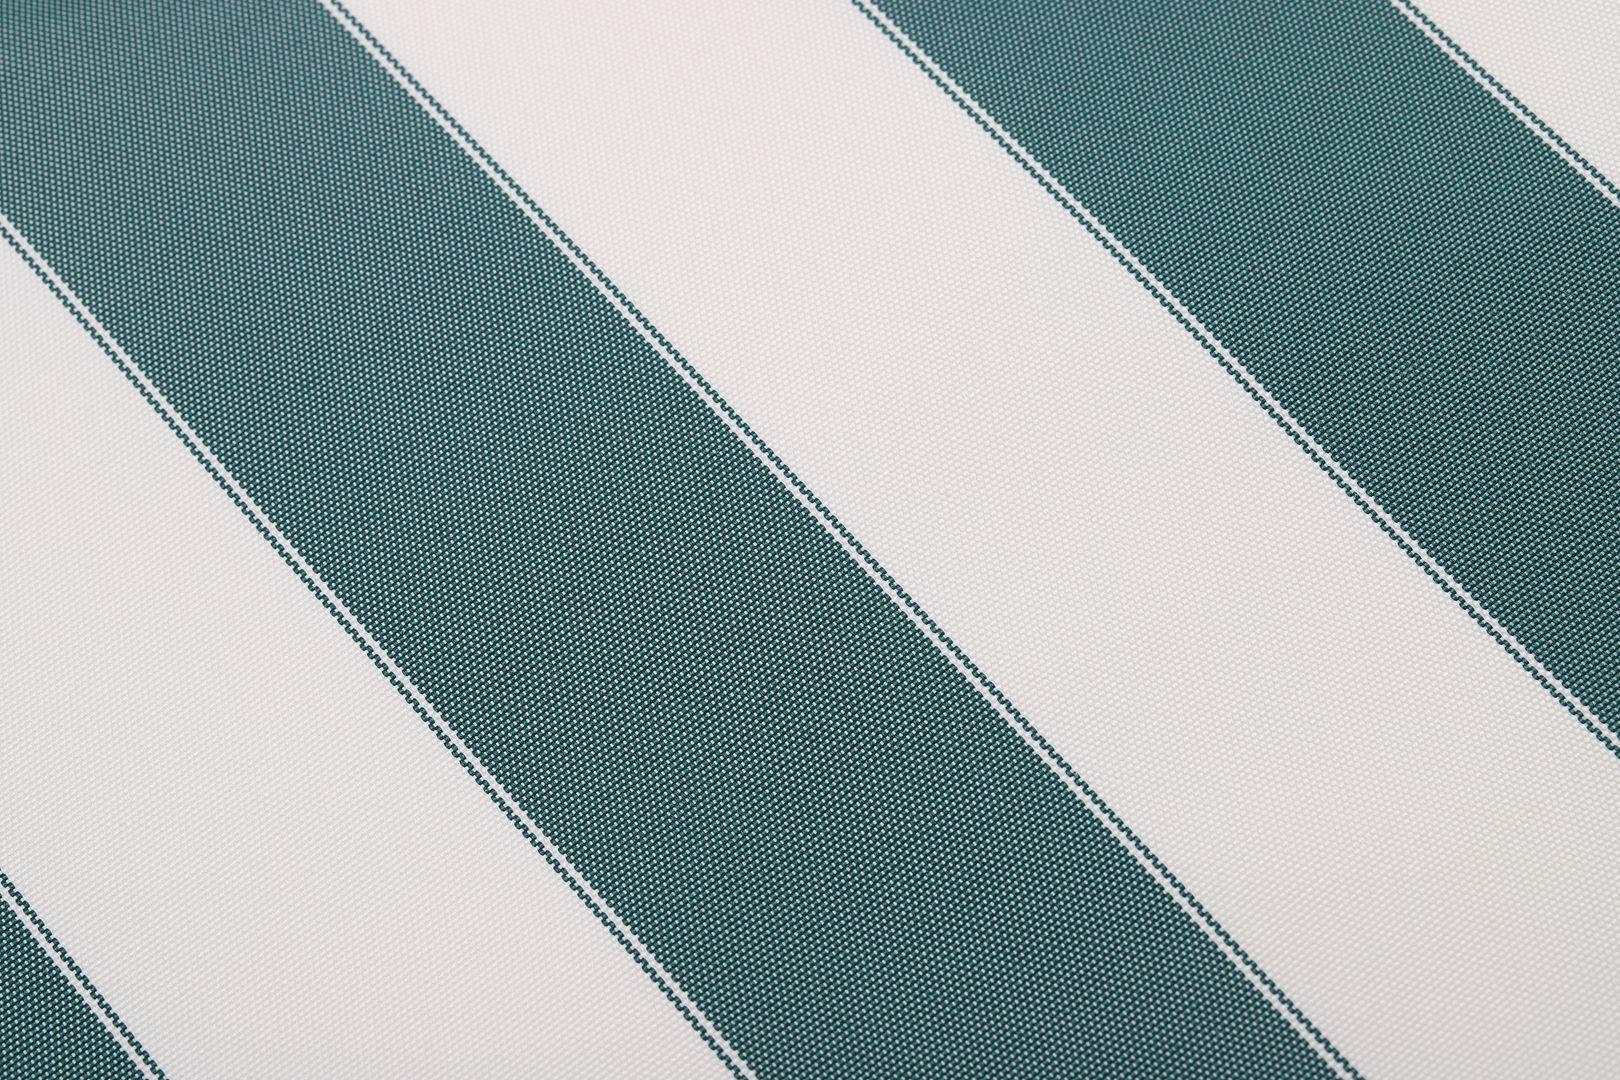 60 Waterproof Oxford Canvas Fabric UV Resistant